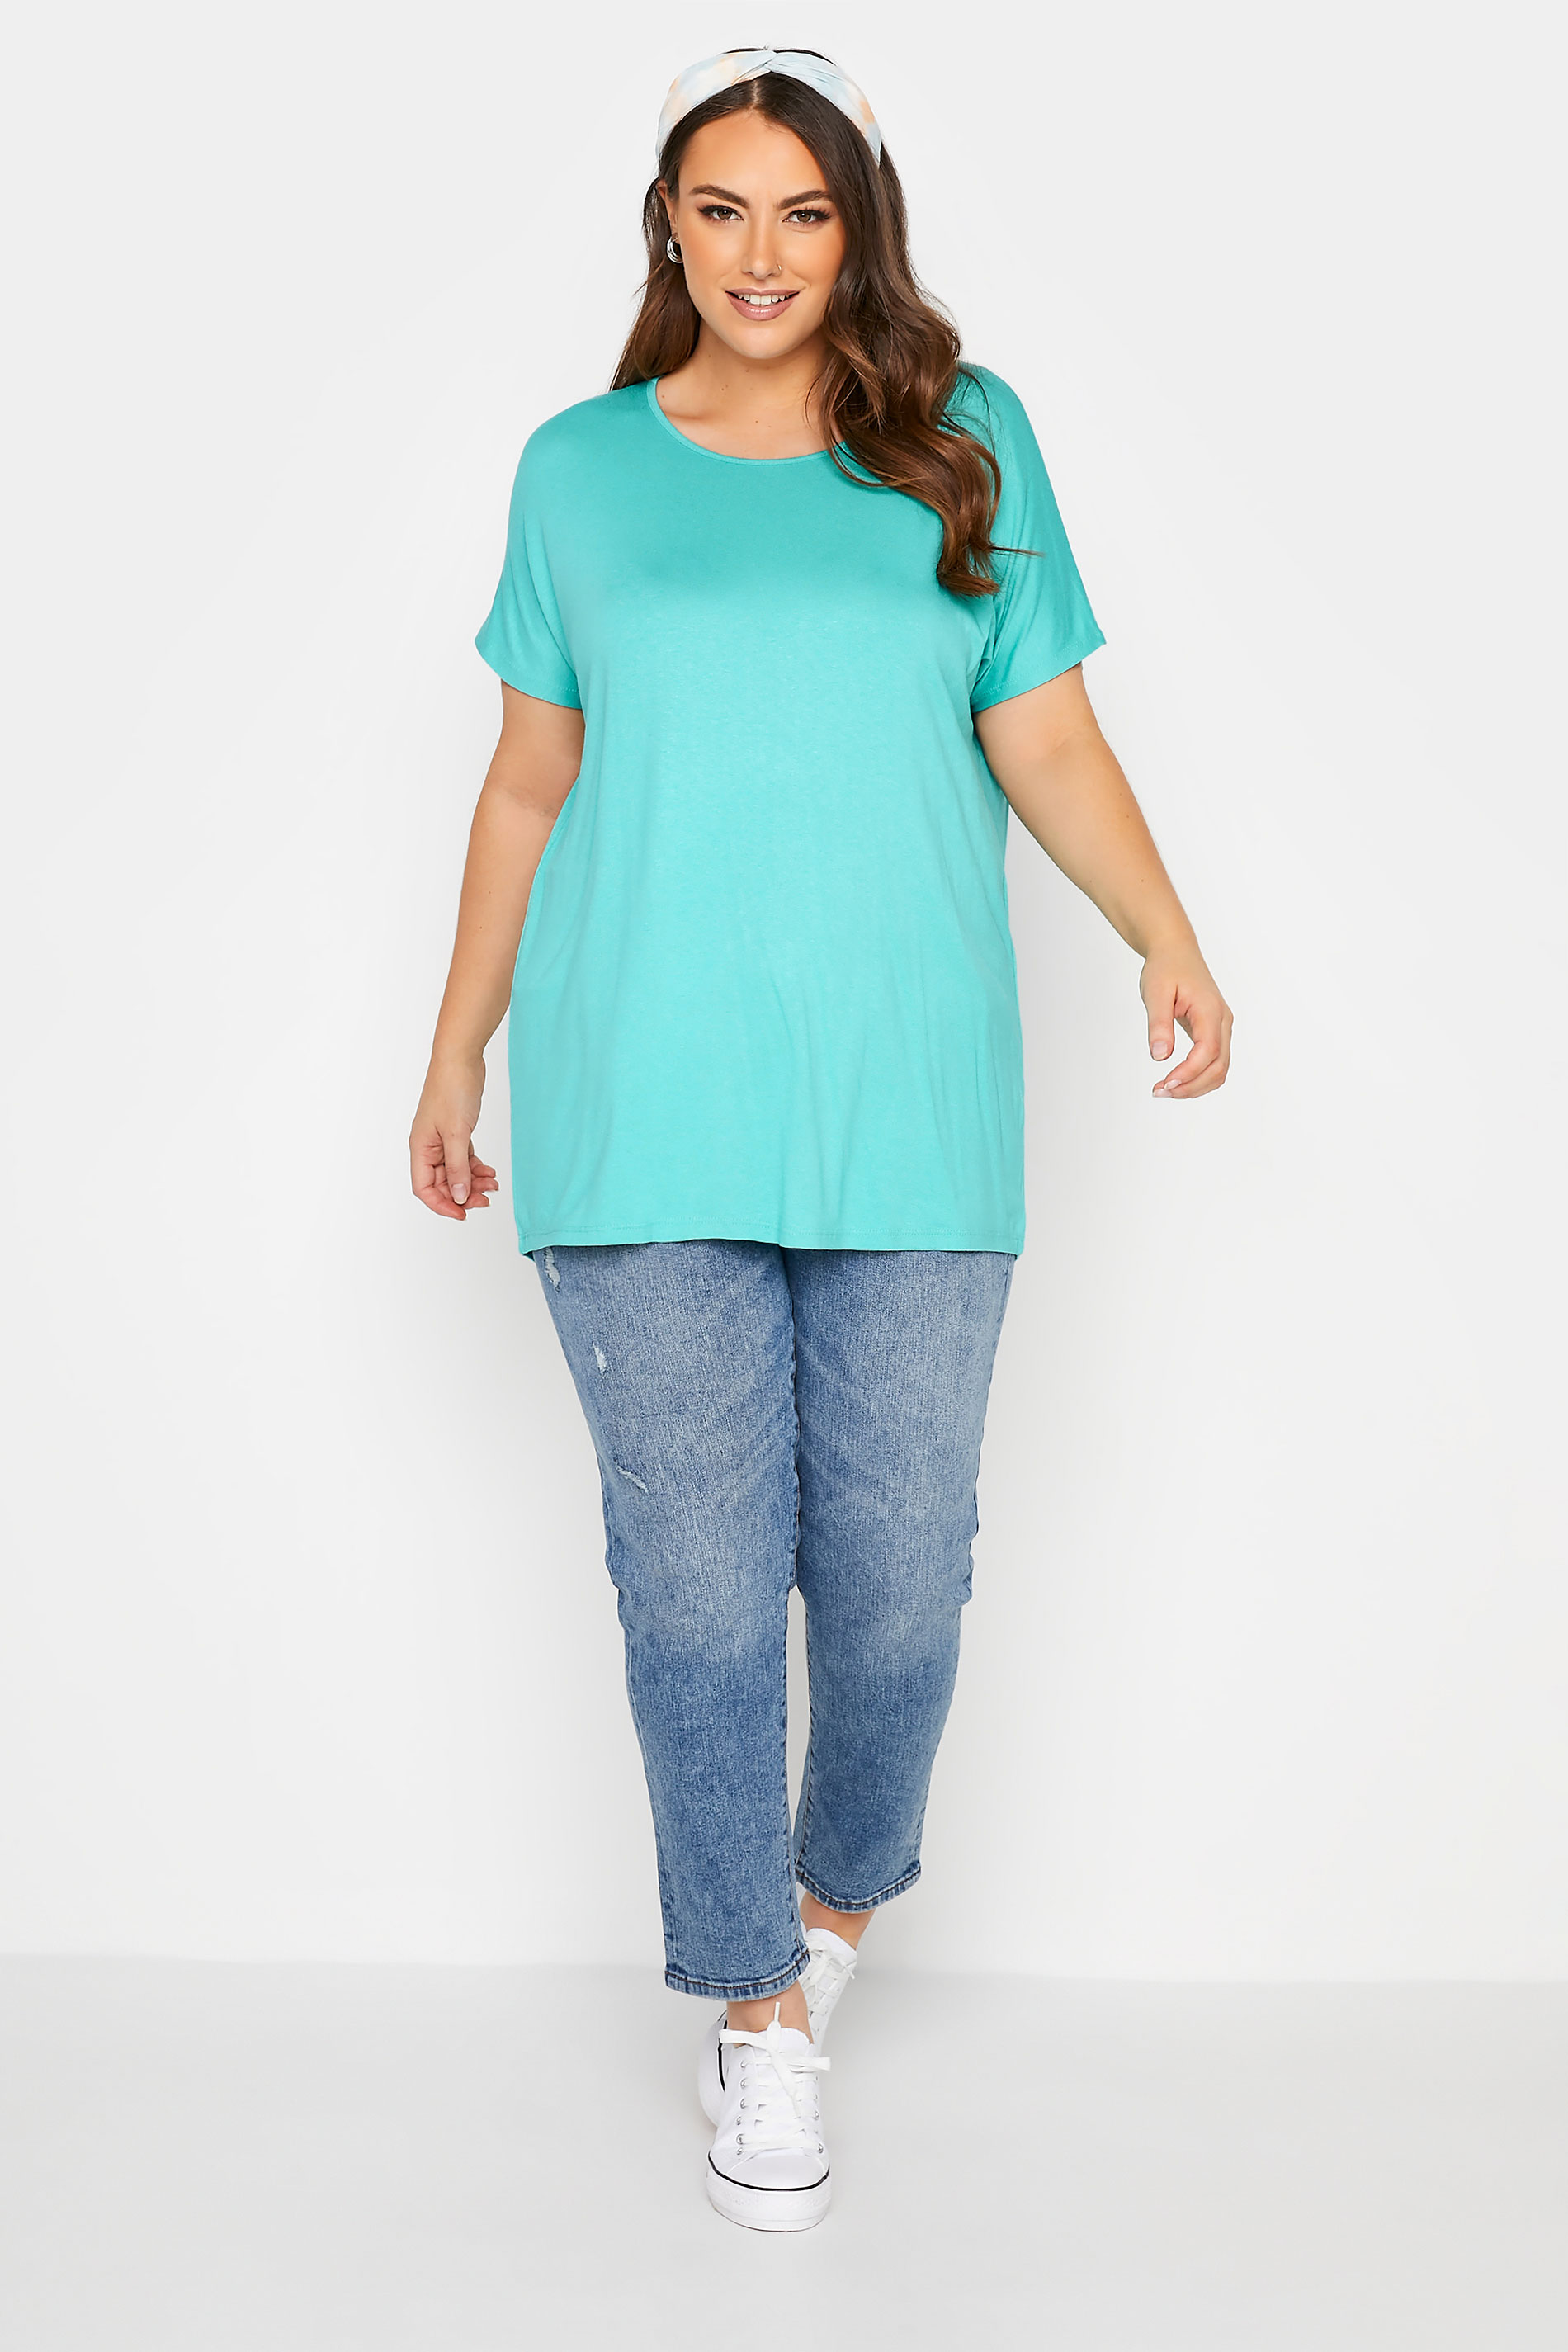 Grande taille  Tops Grande taille  T-Shirts | T-Shirt Bleu Turquoise Manches Courtes en Jersey - BZ49511